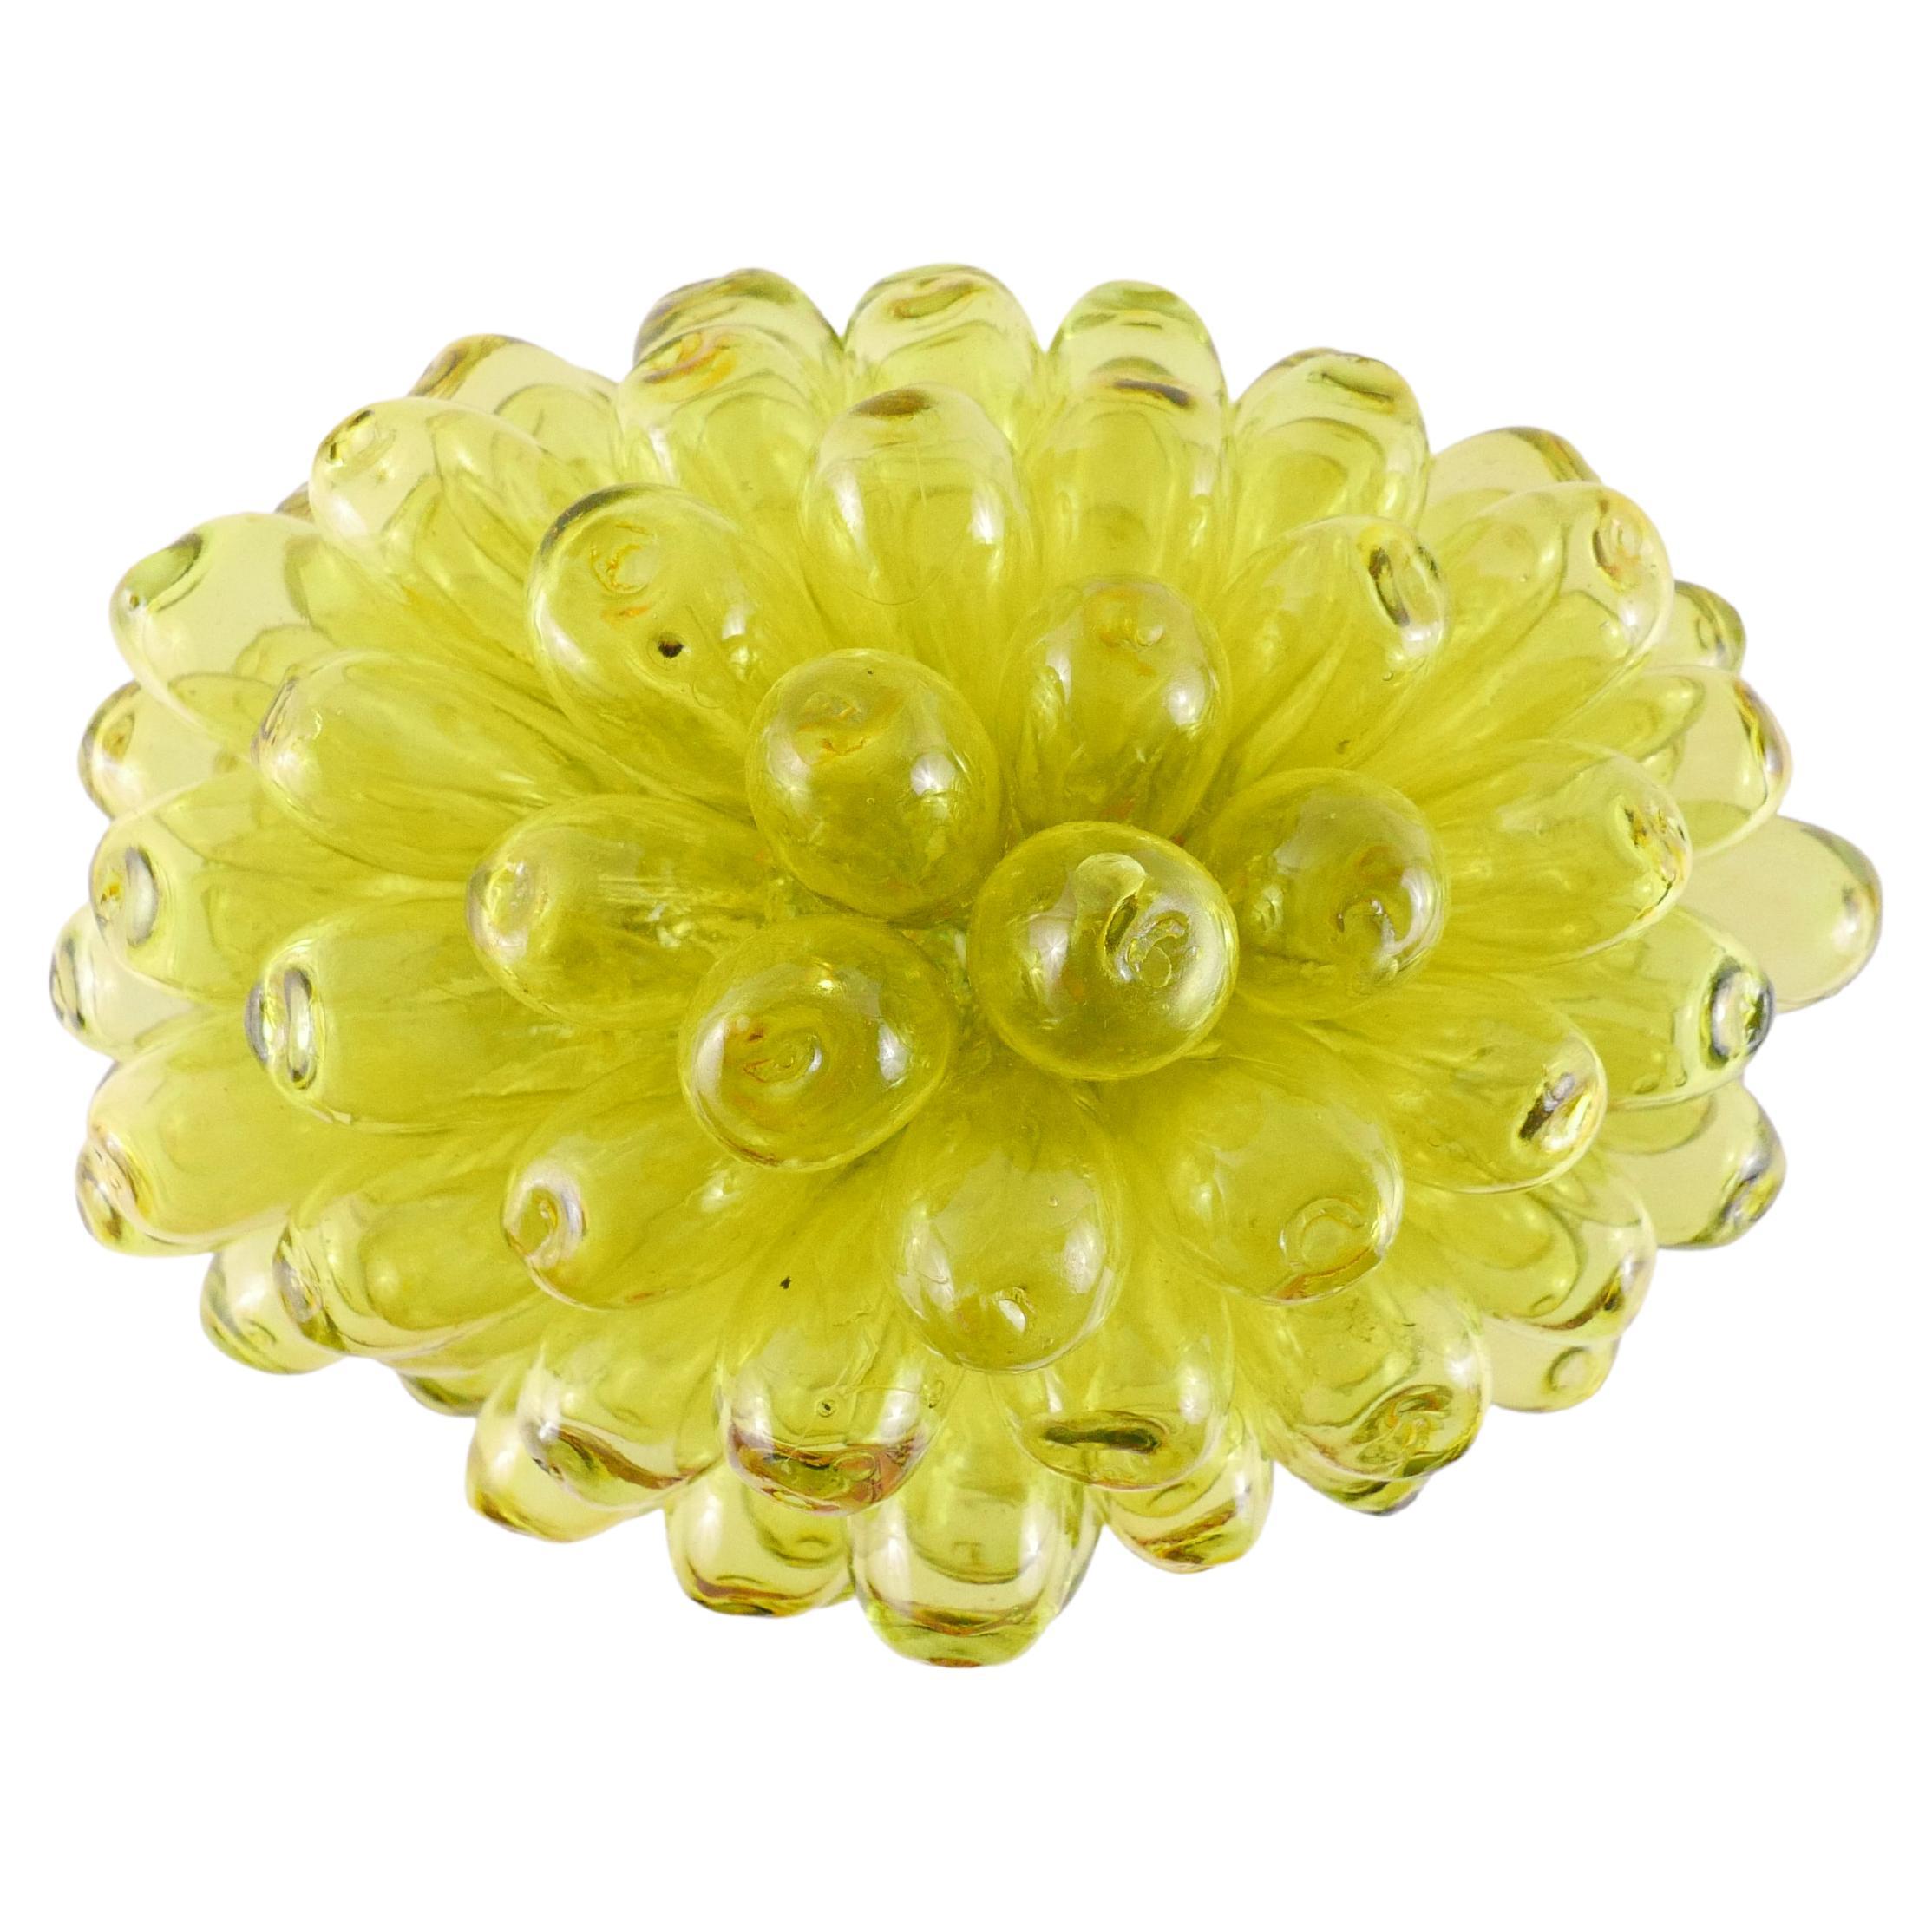 Tablelamp or floorlamp from mouthblown glass - lemon For Sale